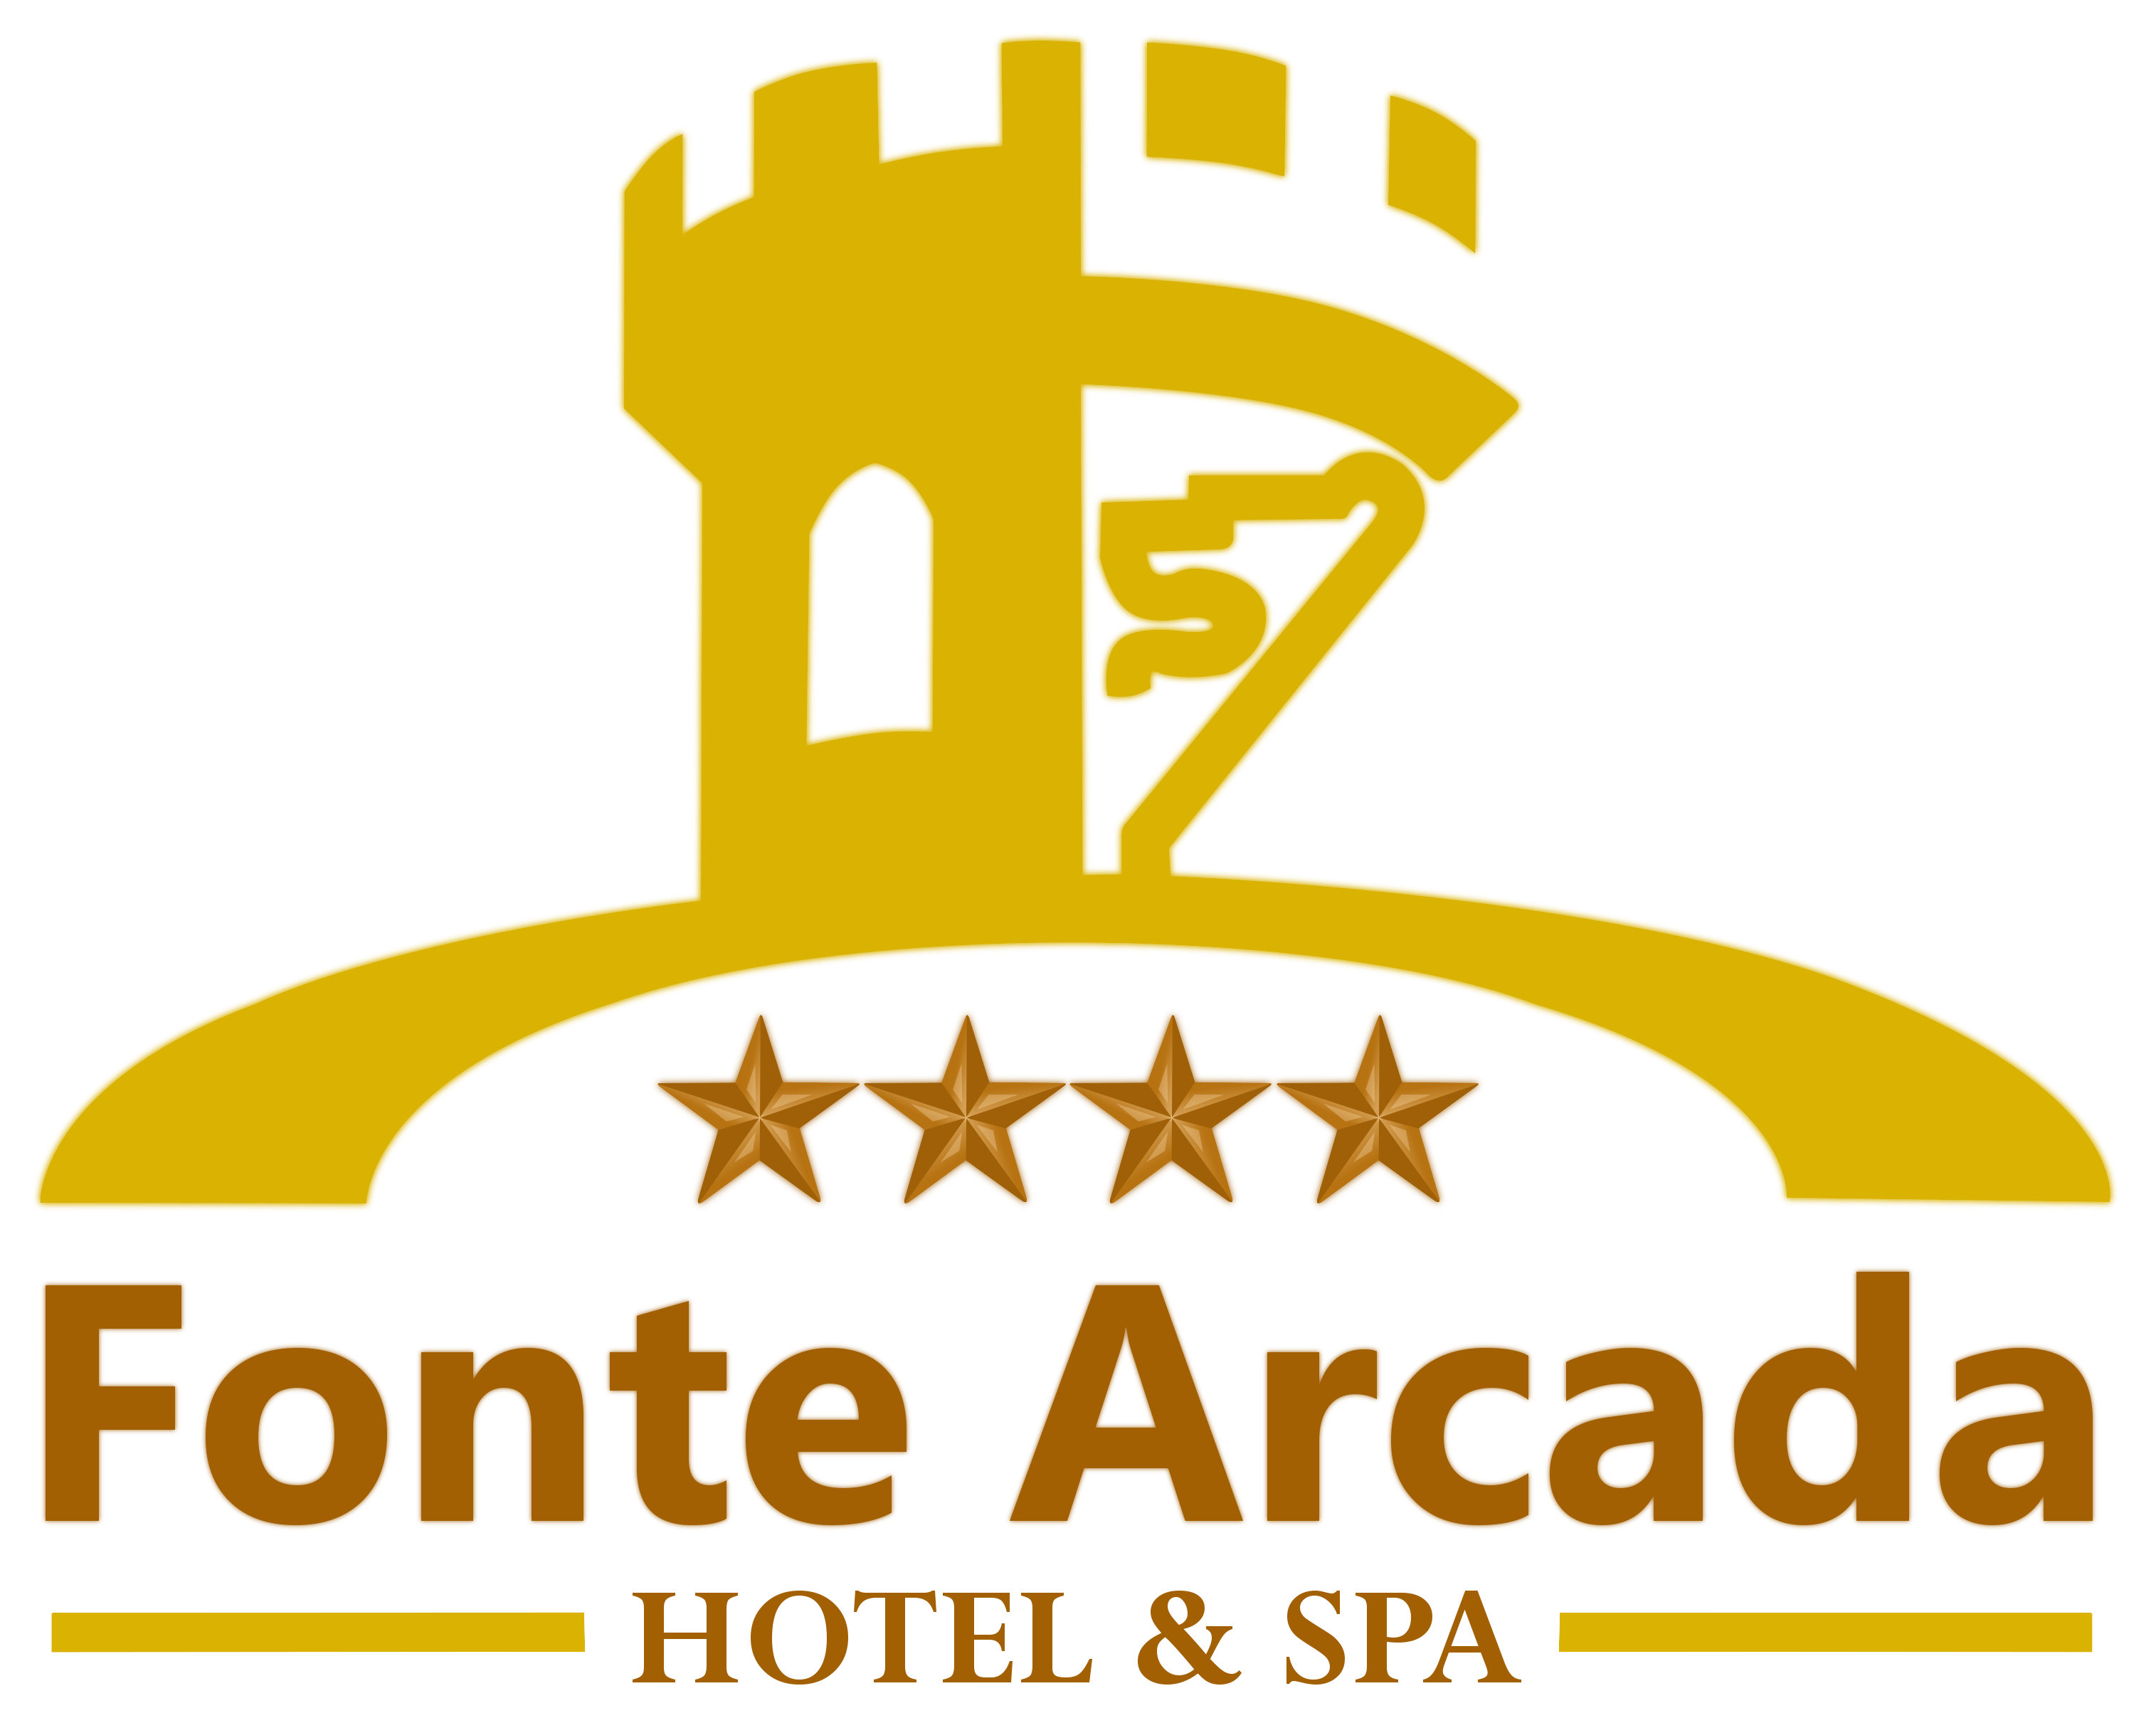 Fonte Arcada Hotel & Spa\ title=